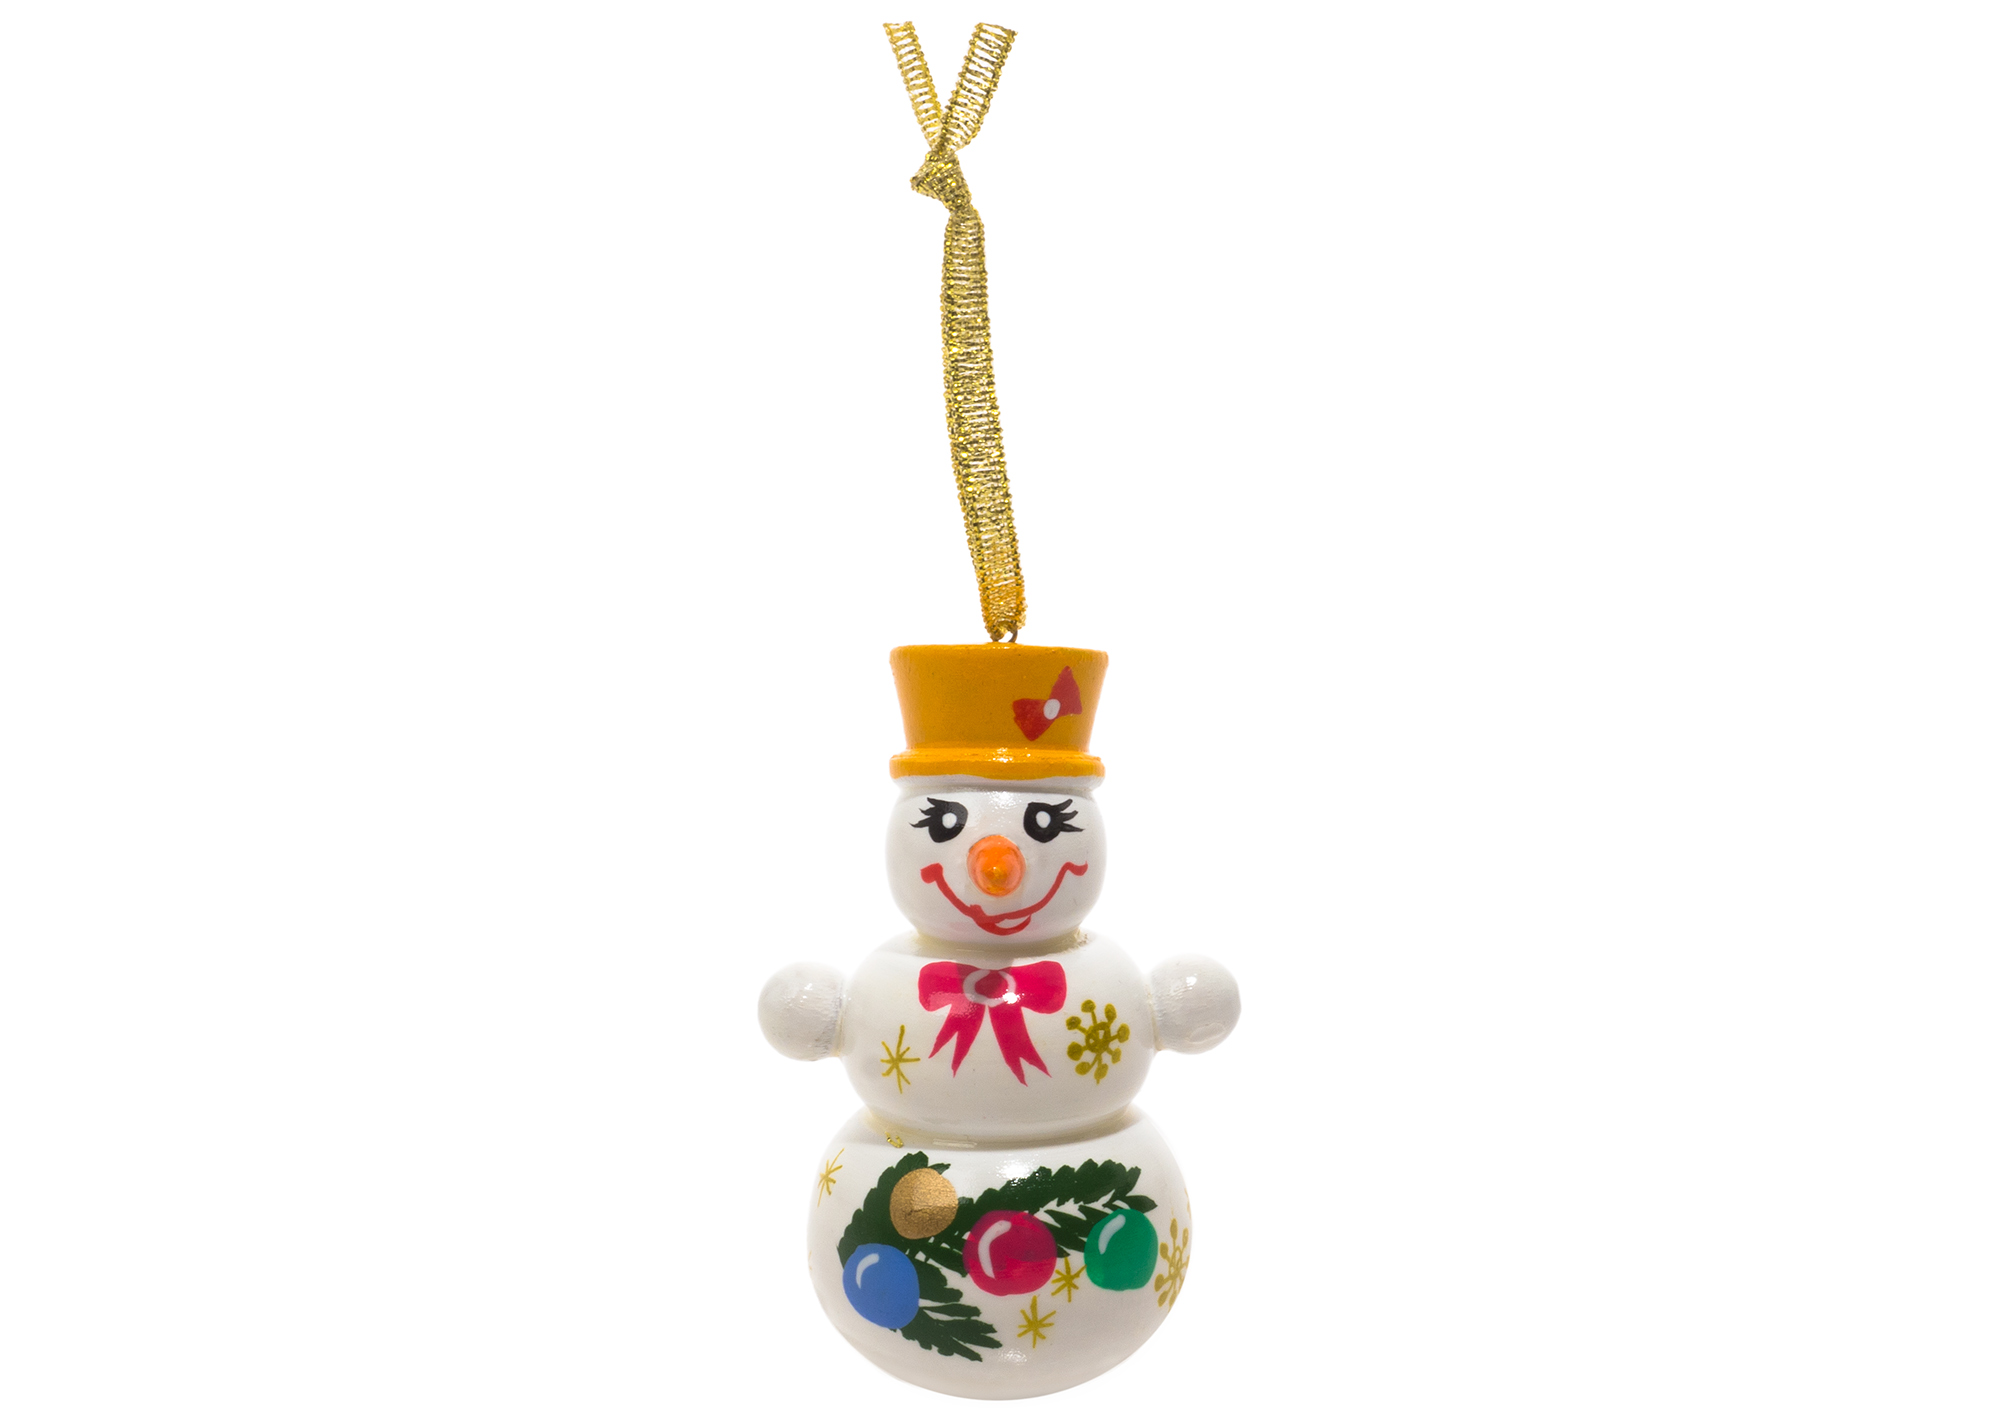 Buy Snow Man with Hat Ornament 3" at GoldenCockerel.com